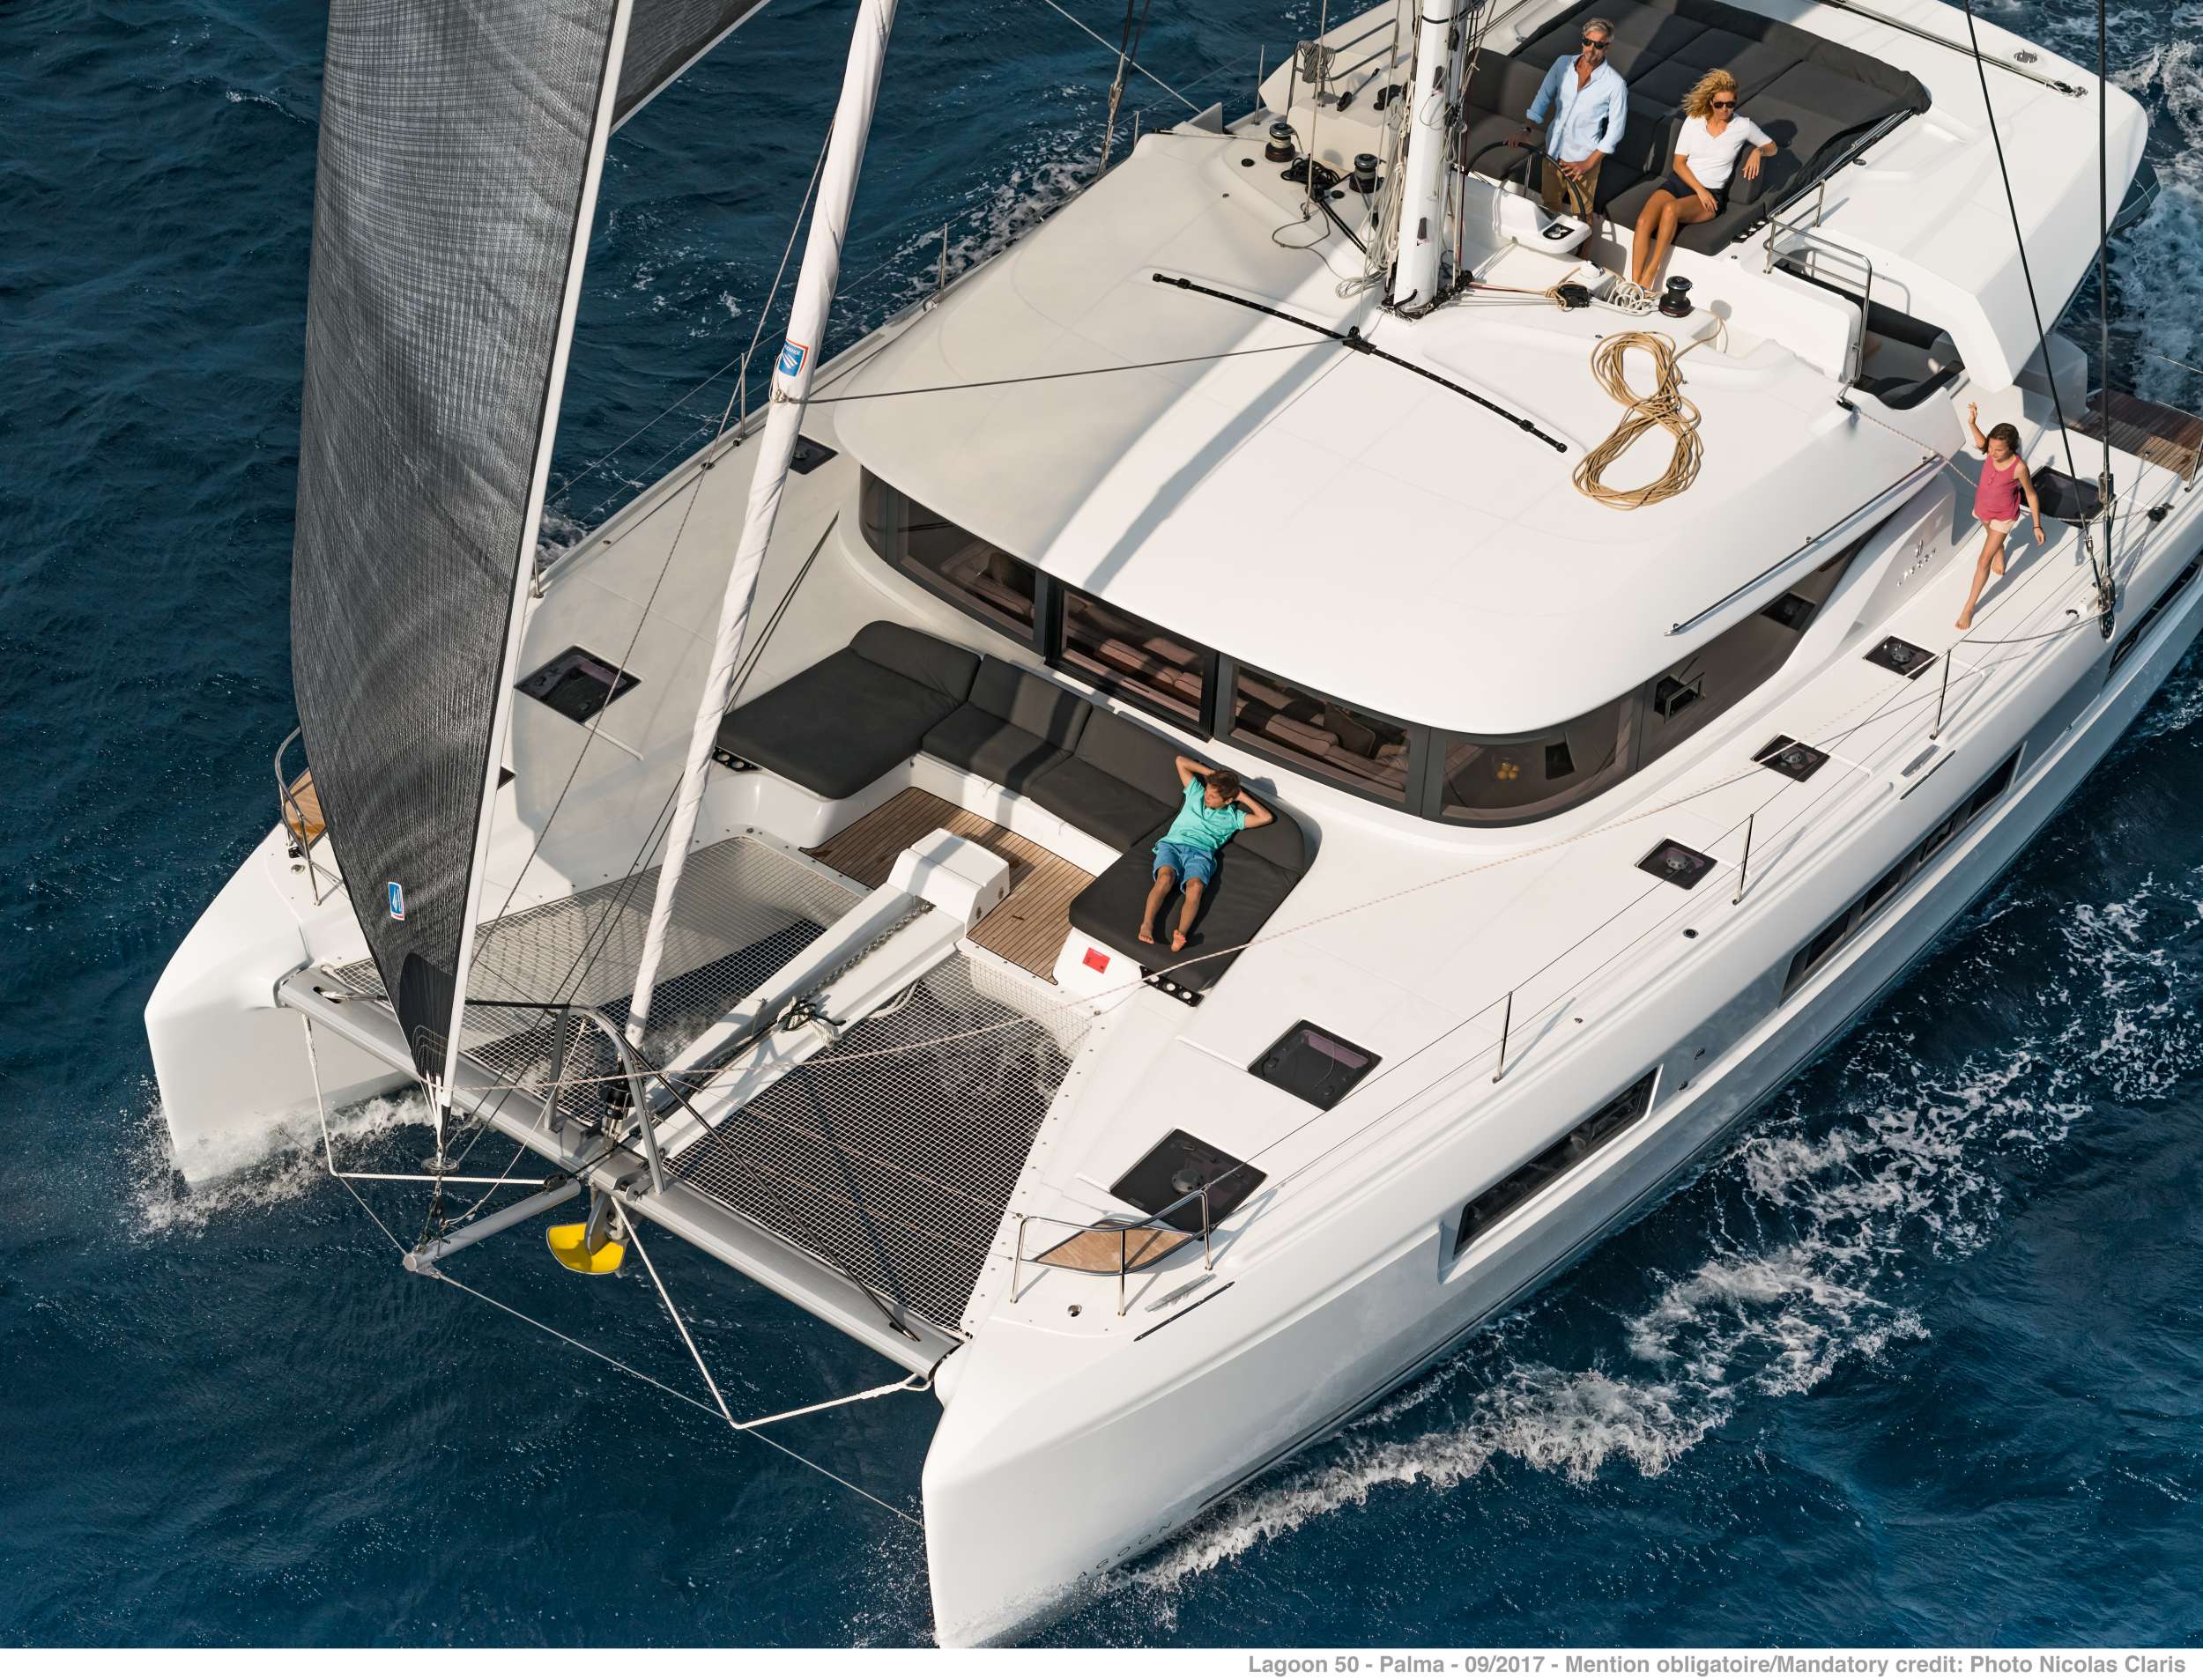 ONEIDA 2 - Yacht Charter Porto Koufo & Boat hire in Greece 6